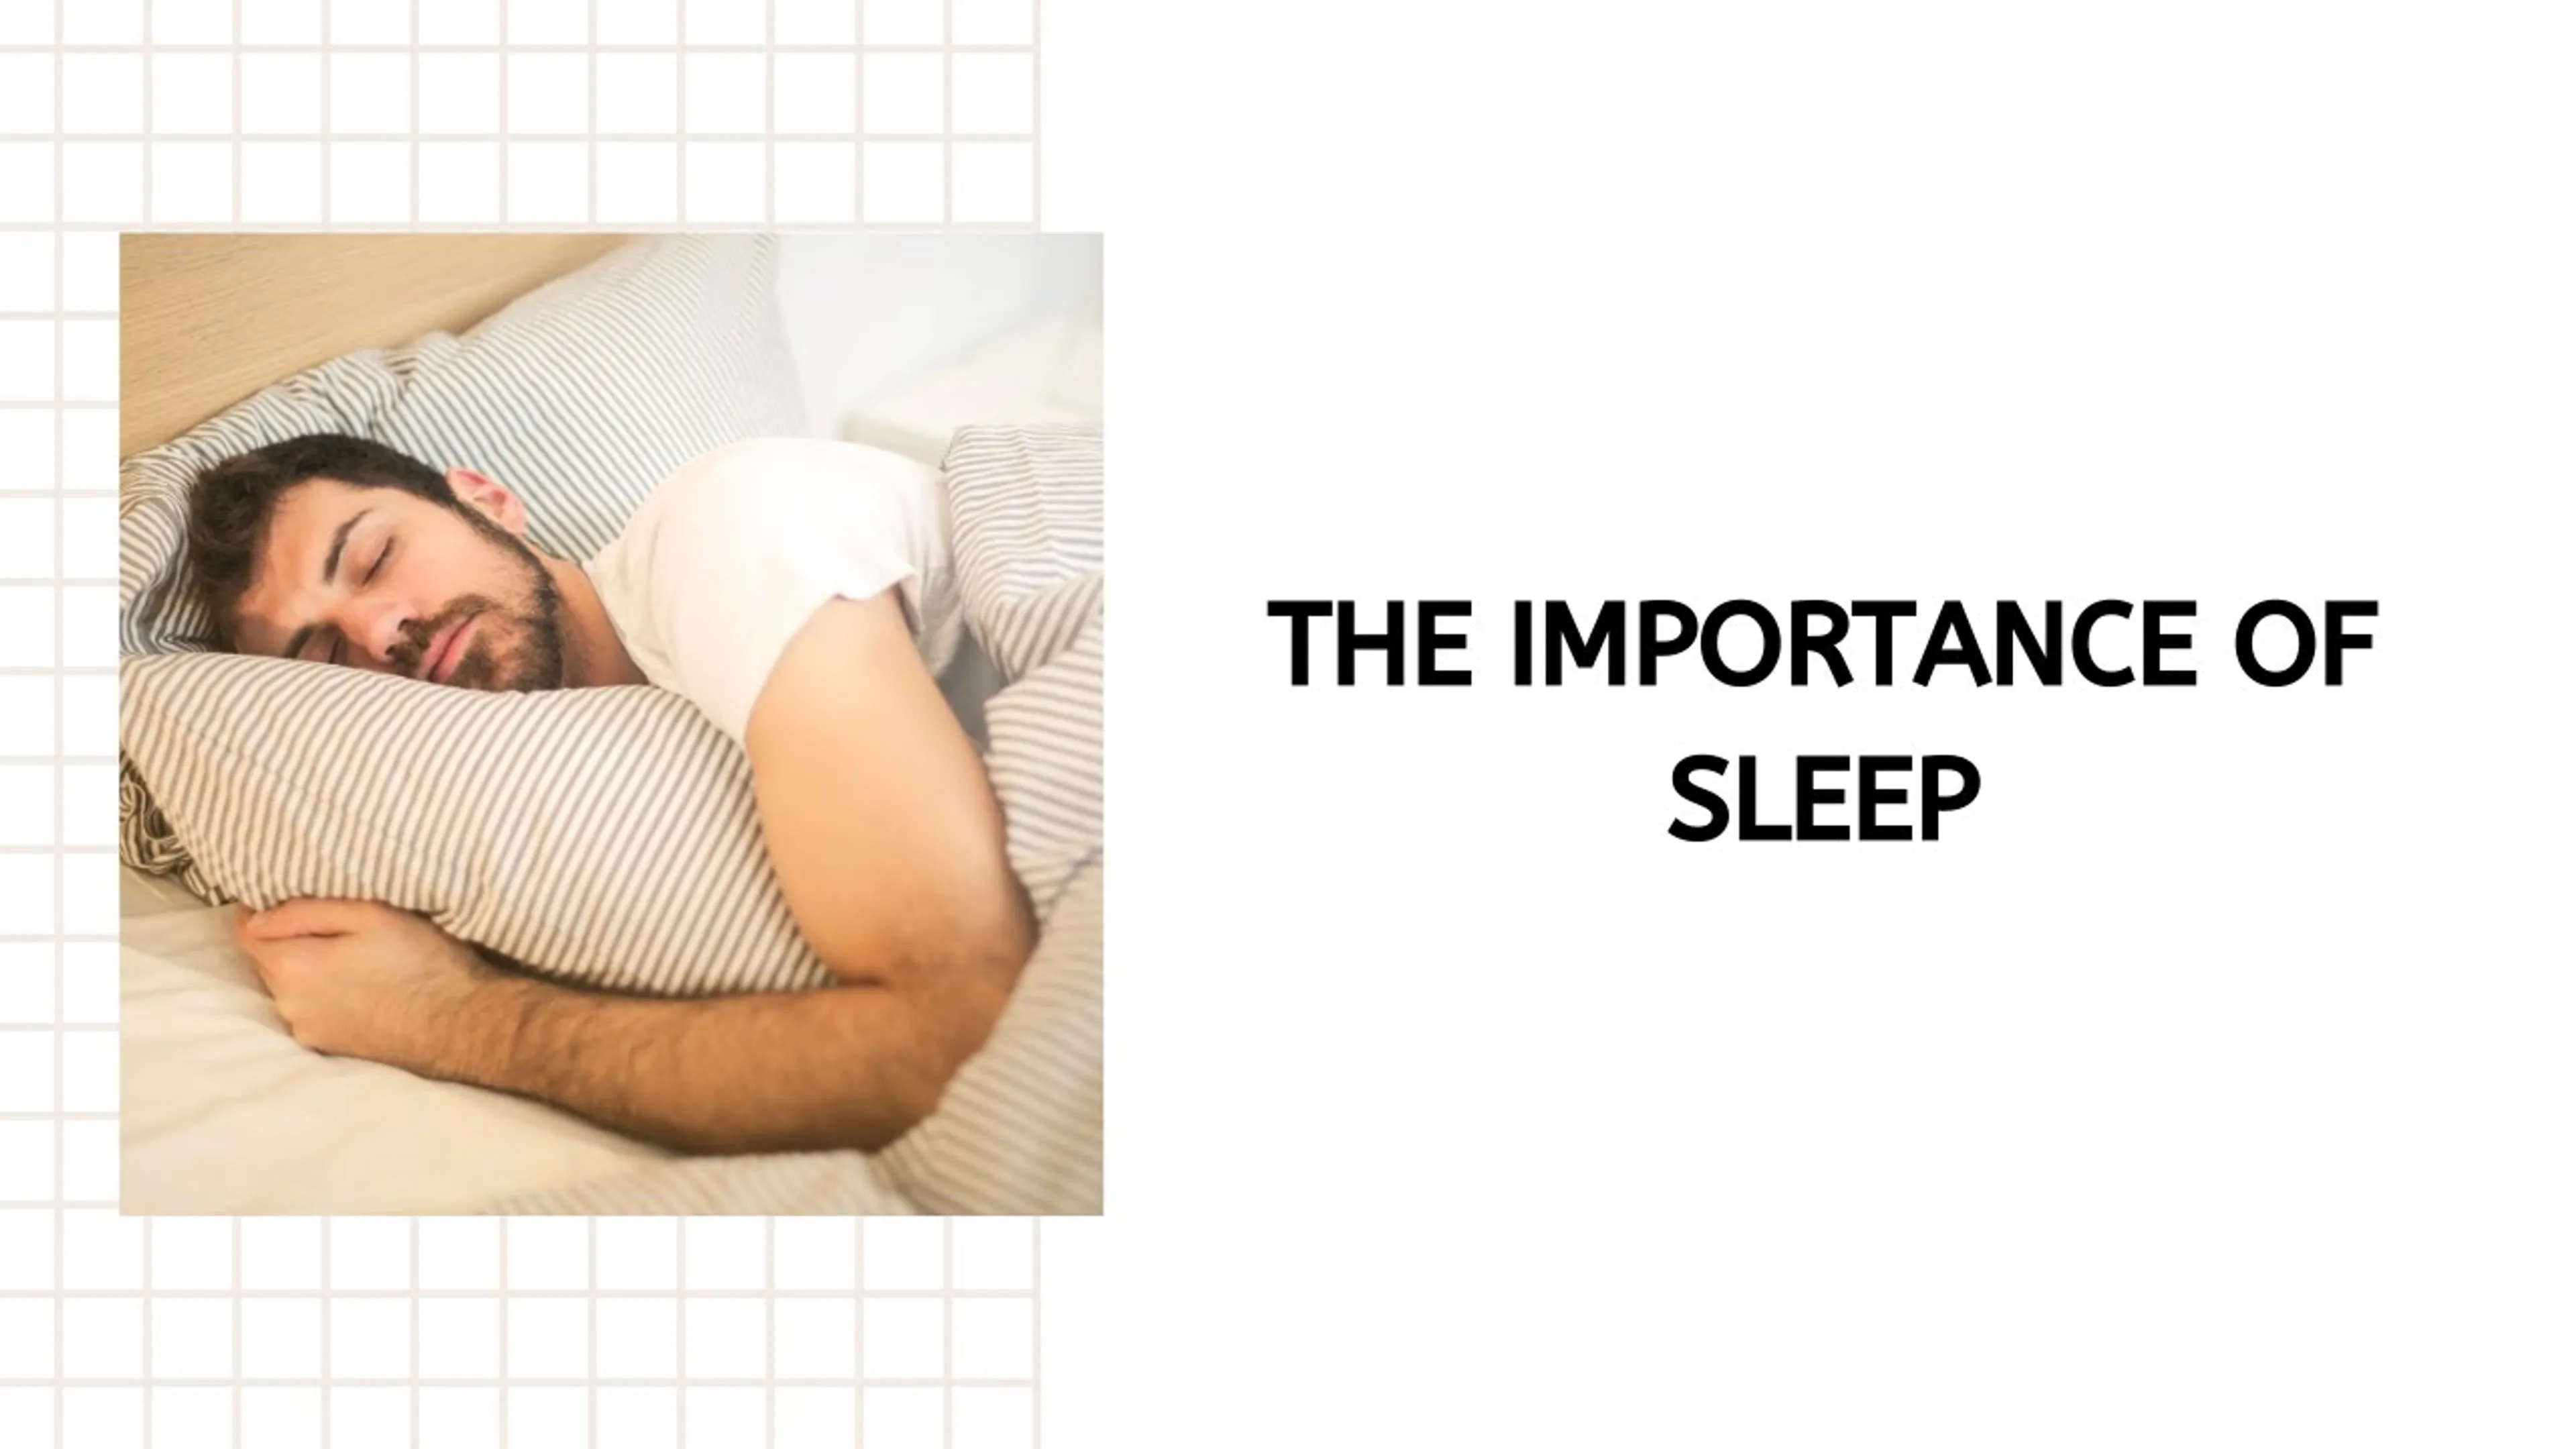 Sleep and its Importance